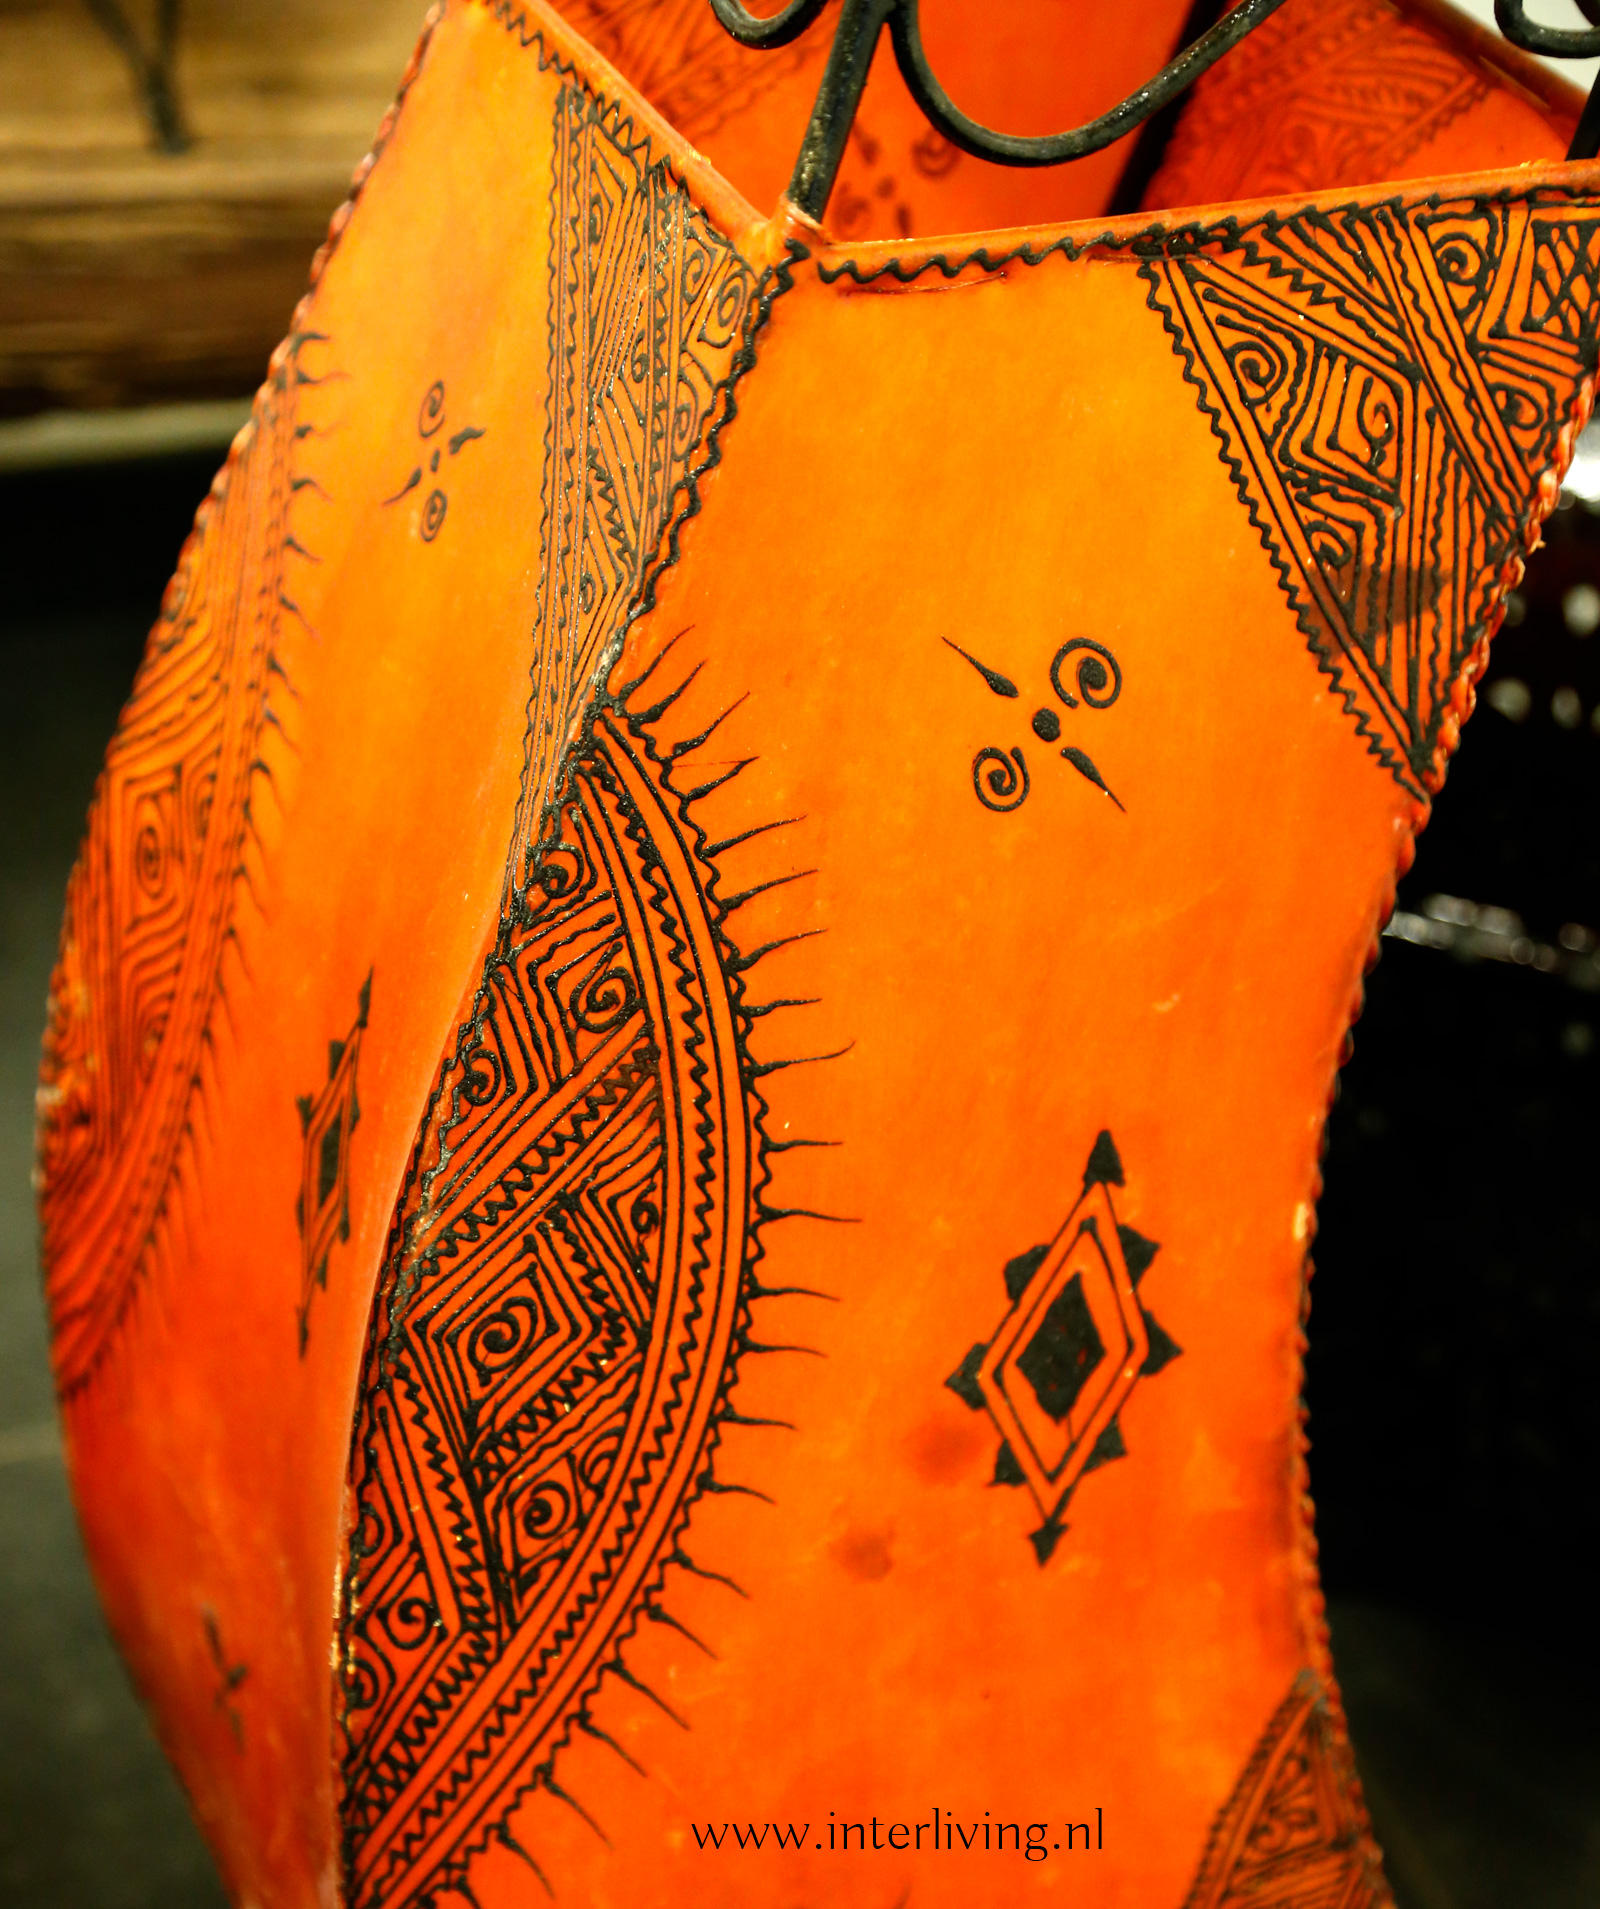 hennalamp - oranje hennalamp uit Marokko & Marrakesh style interieur